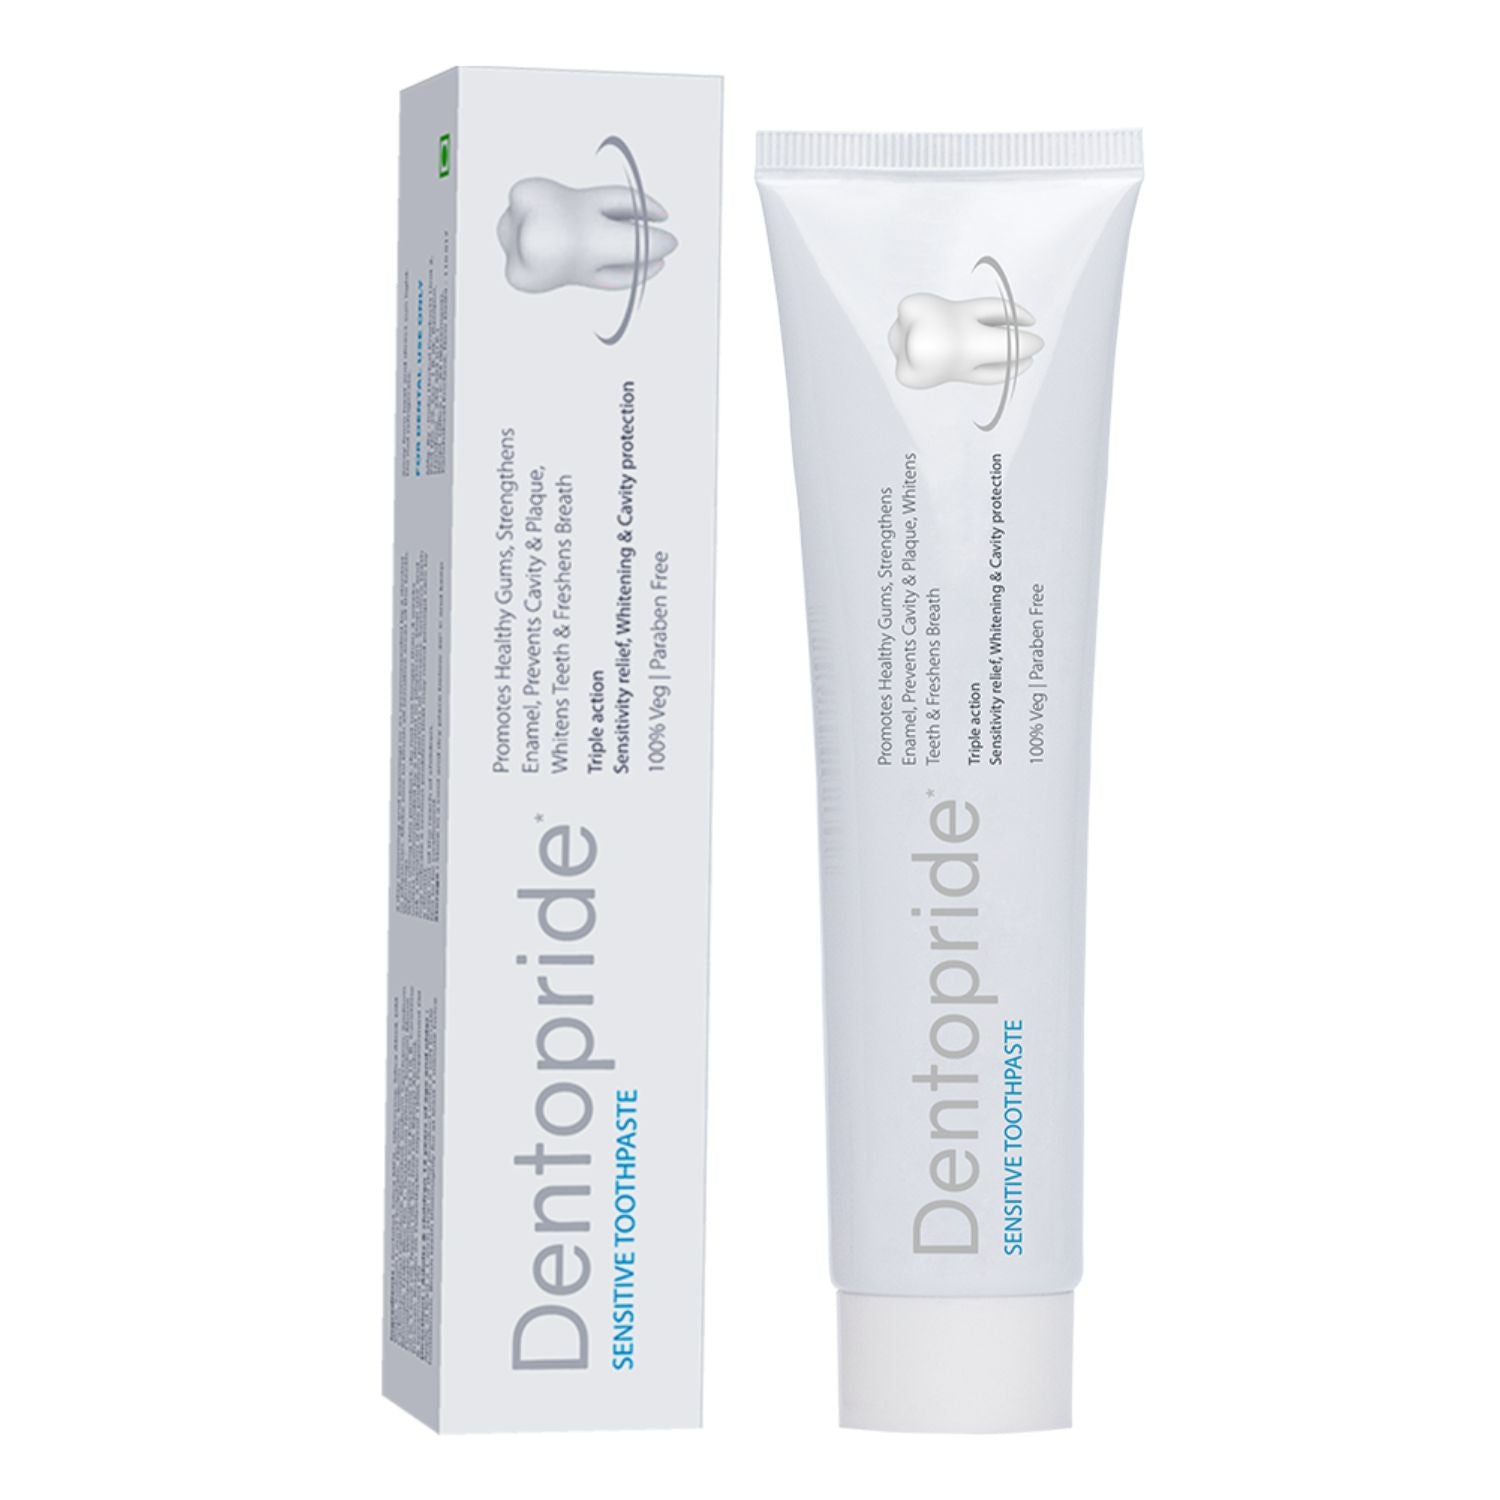 Dentopride Sensitive Toothpaste (100 gm)